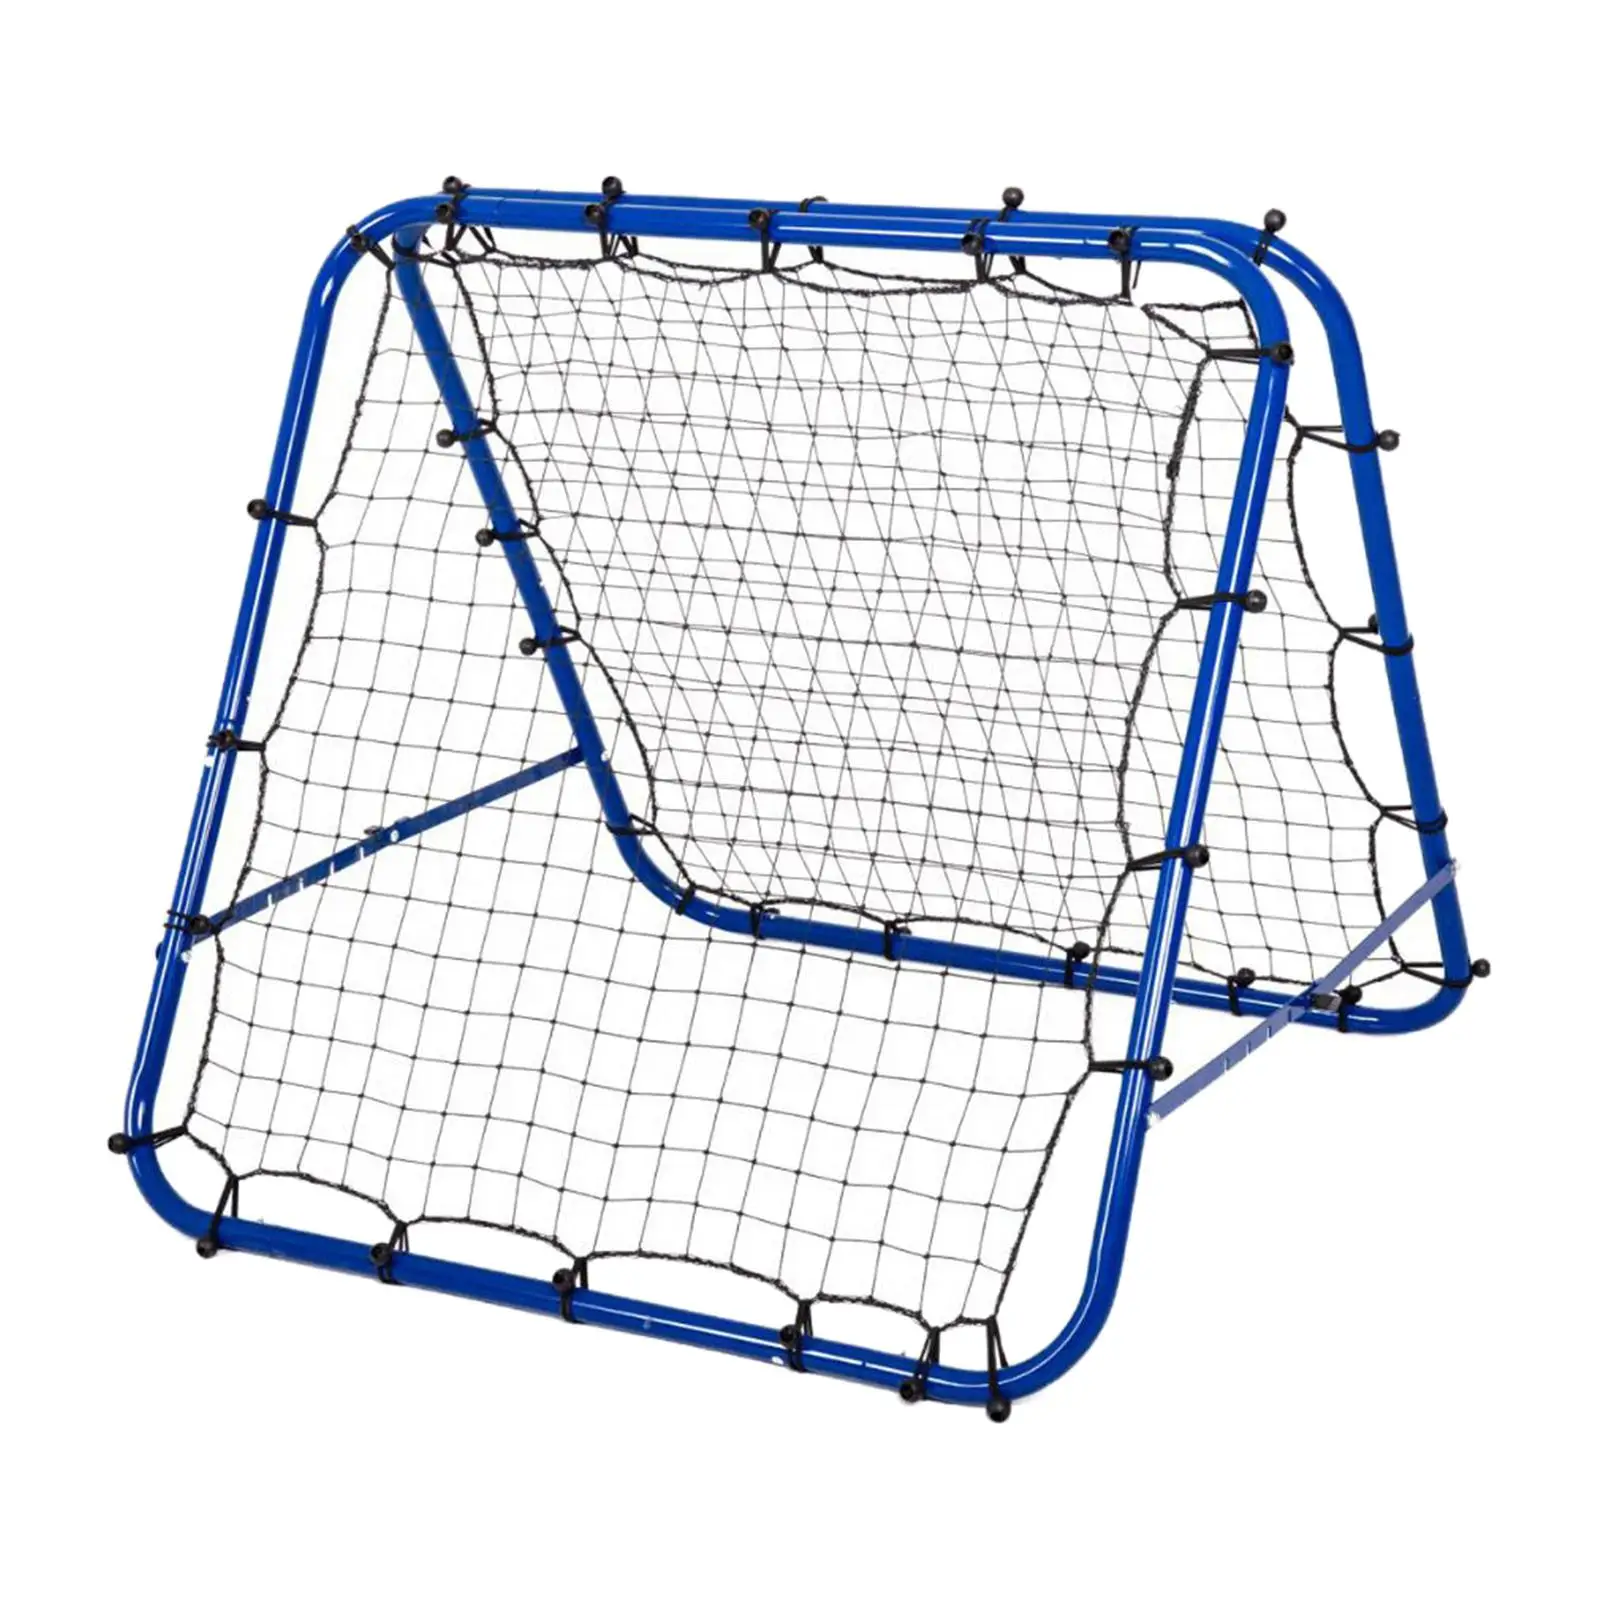 Portable Soccer Goal Easy Assembly Steel Frame Outdoor Sport Training Soccer Practice Football Sport Toy